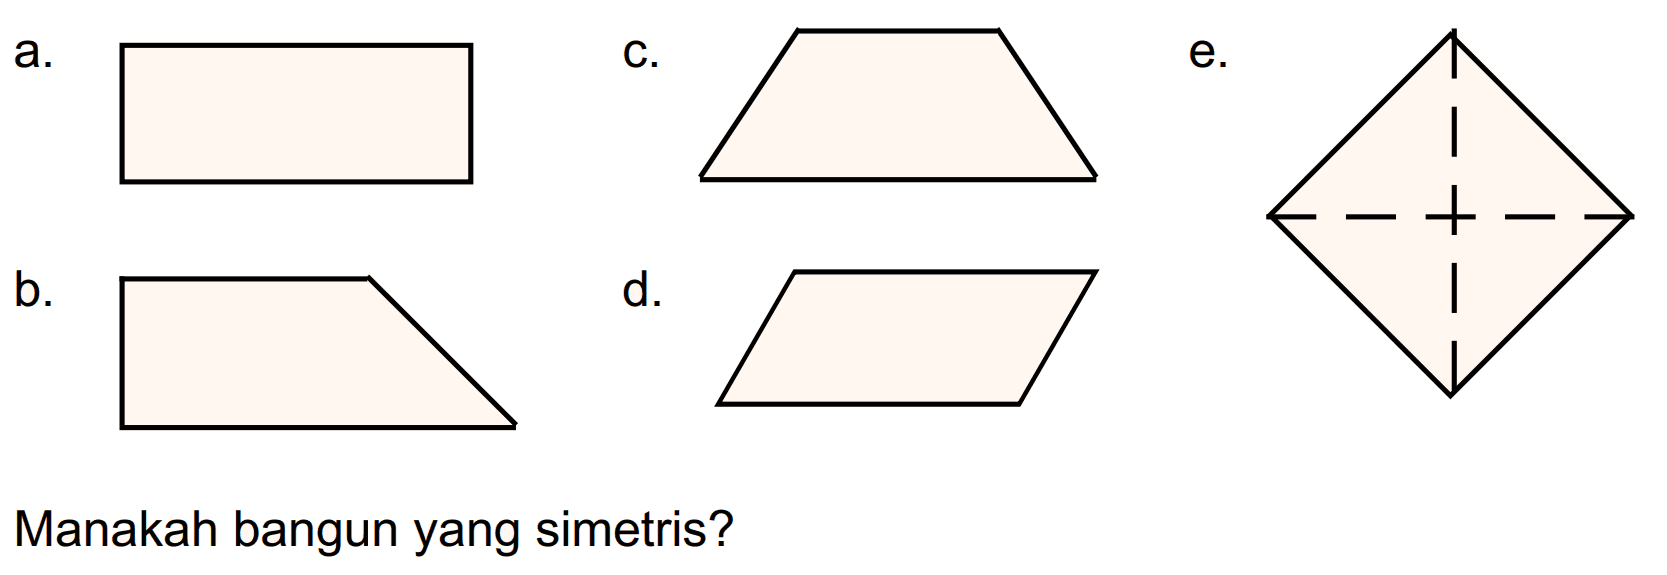 a. (persegi panjang) 
b. (trapesium siku-siku) 
c. (trapesium sama kaki) 
d. (jajargenjang) 
e. (belah ketupat) 
Manakah bangun yang simetris?